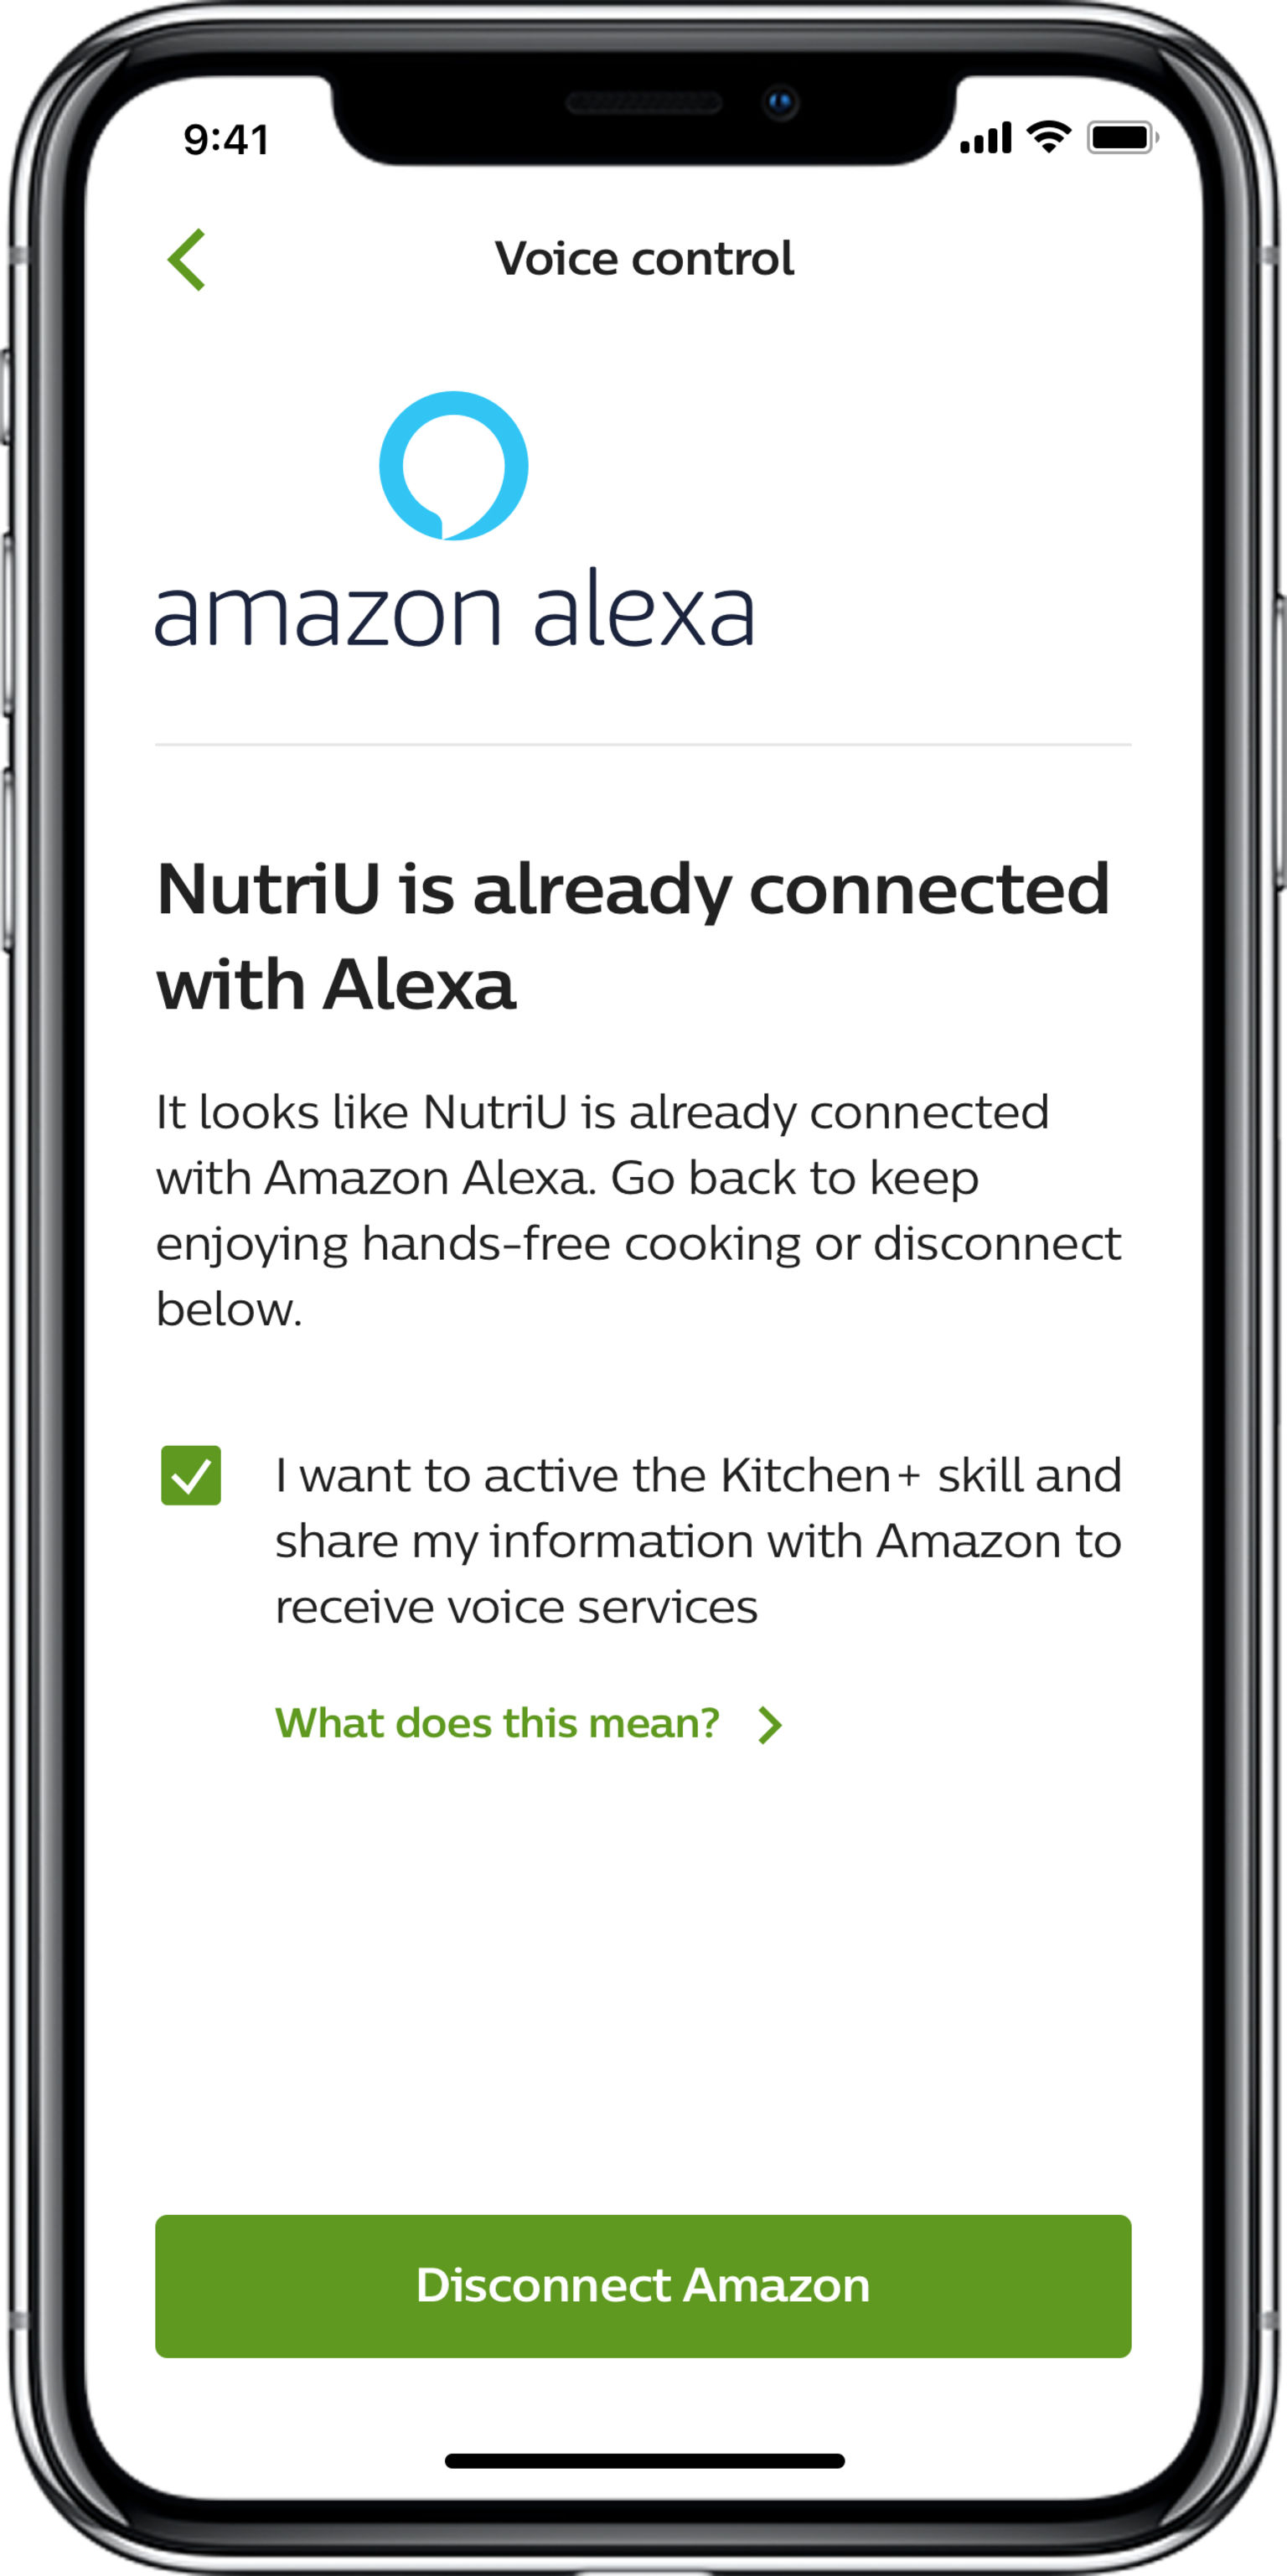 Philips NutriU app